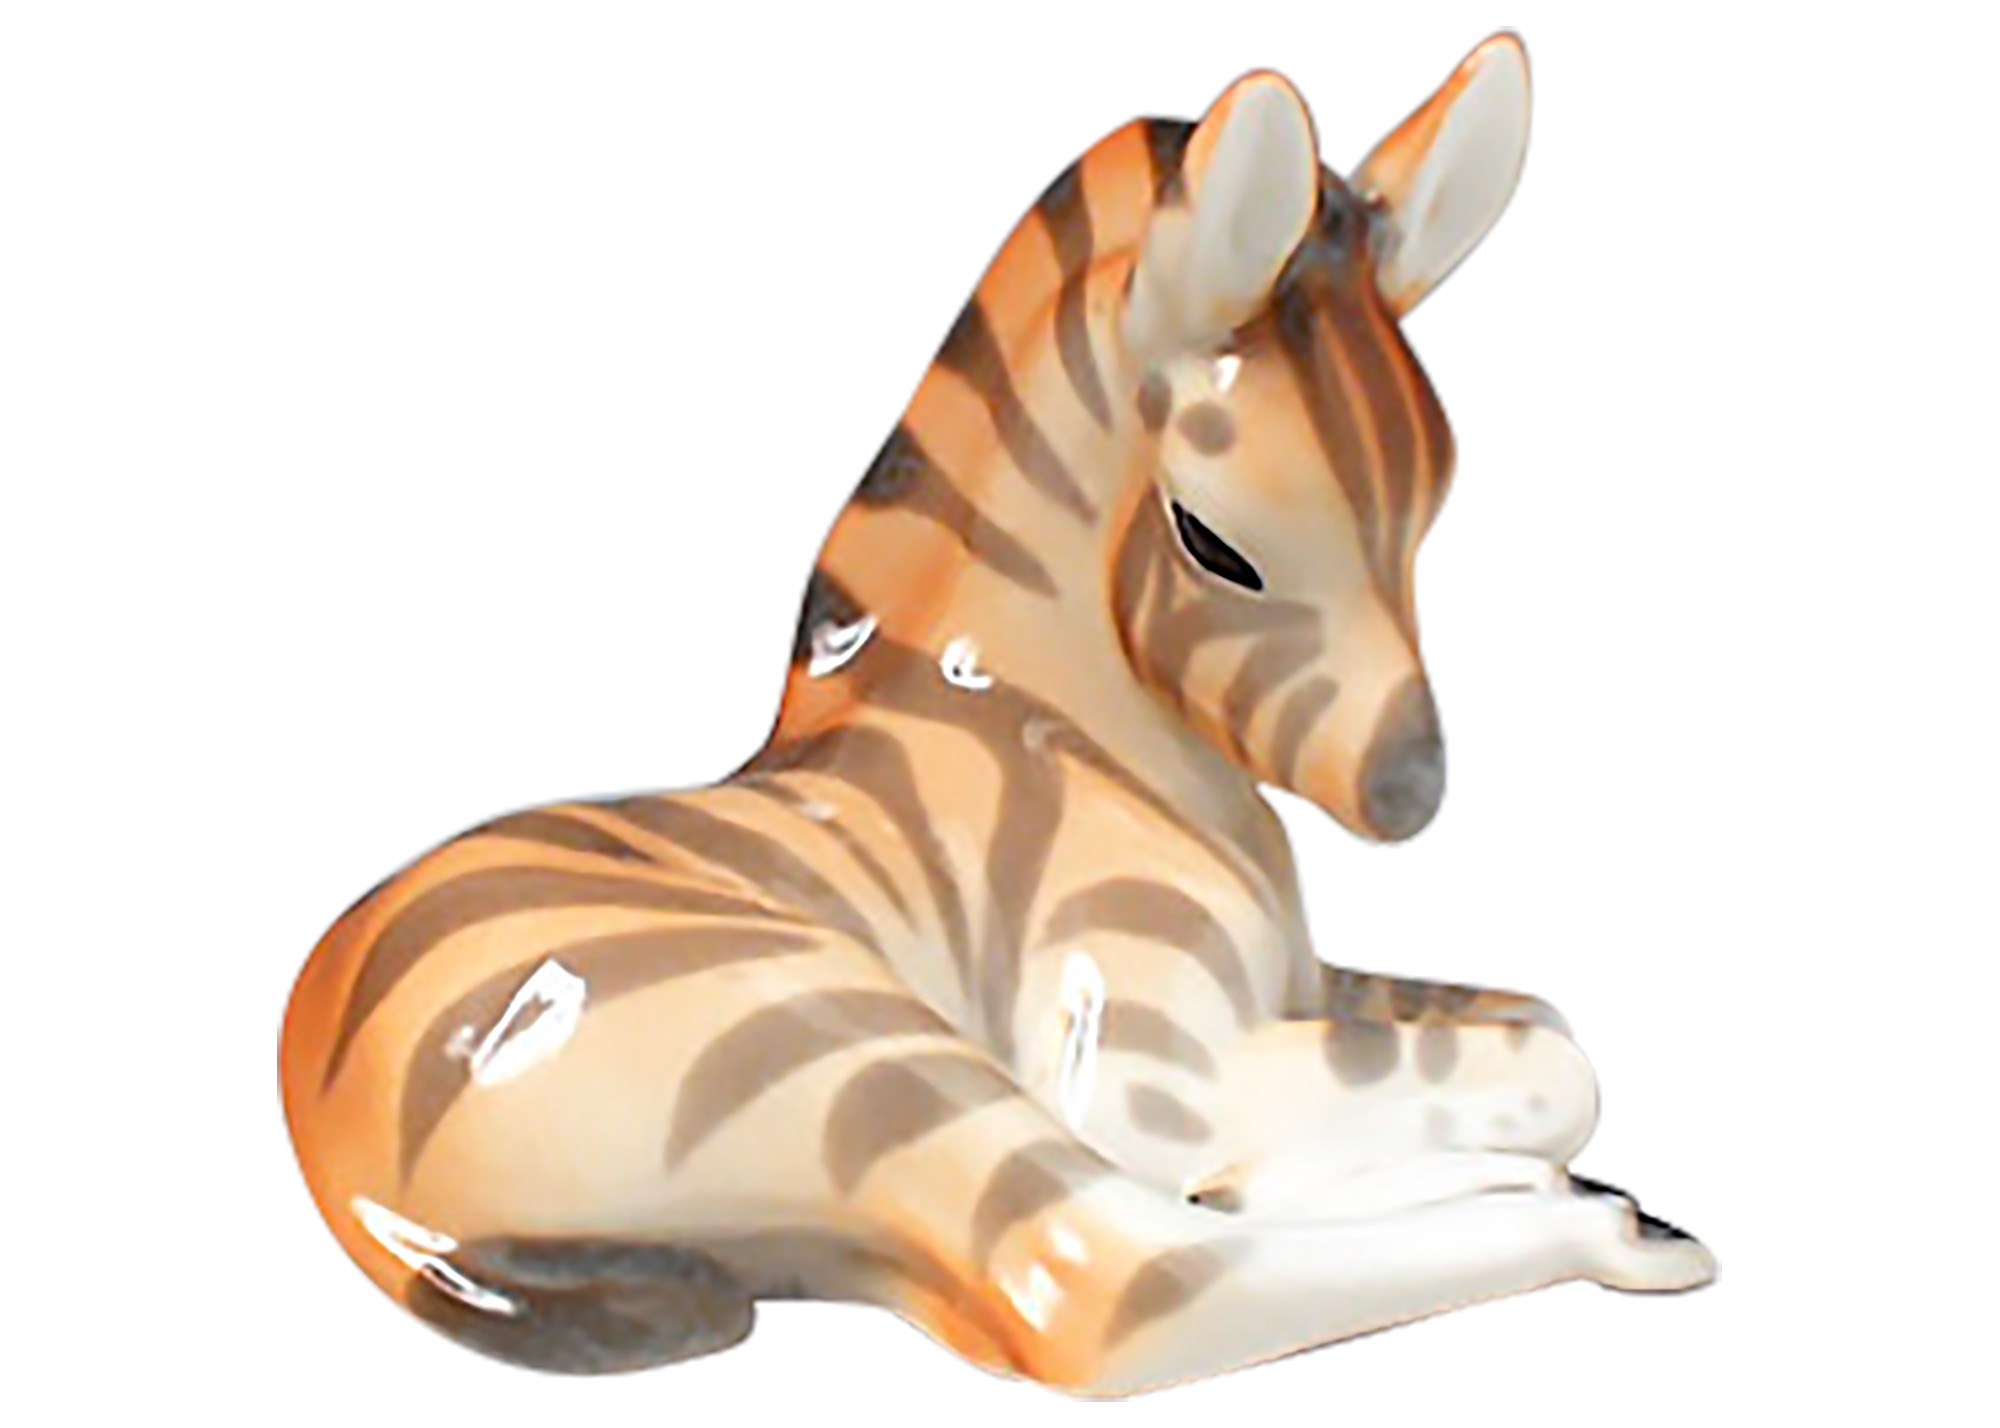 Buy Baby Zebra Lying Down Figurine at GoldenCockerel.com